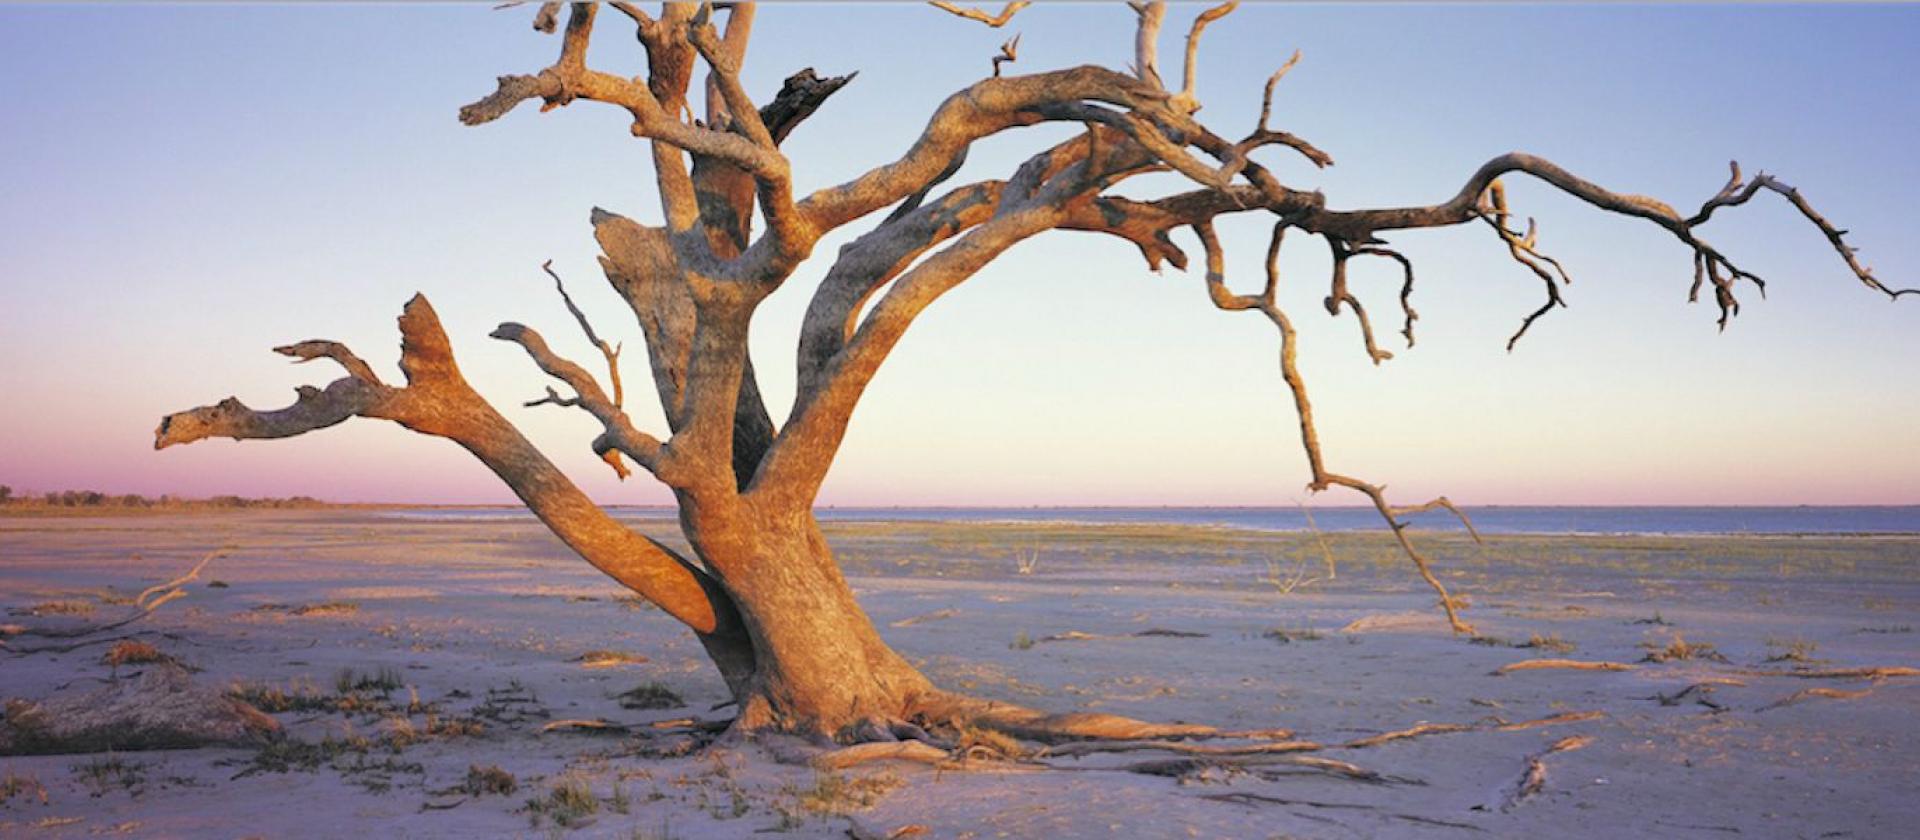 Twisted Tree, Menindee Lakes near Broken Hill